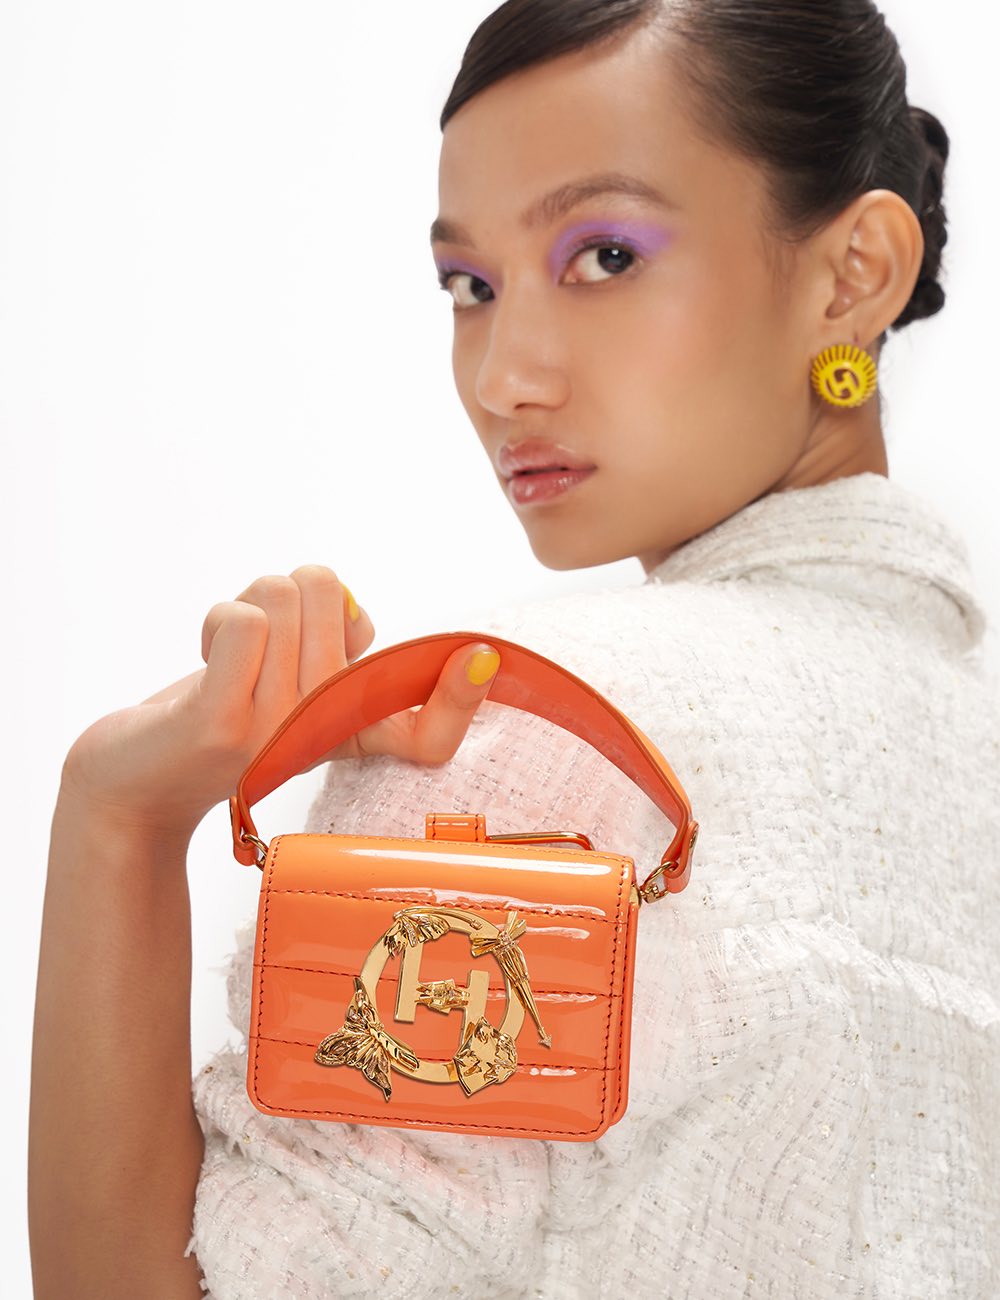 Crochet orange drawstring pouch bag dice bag | crochet tutorial - YouTube